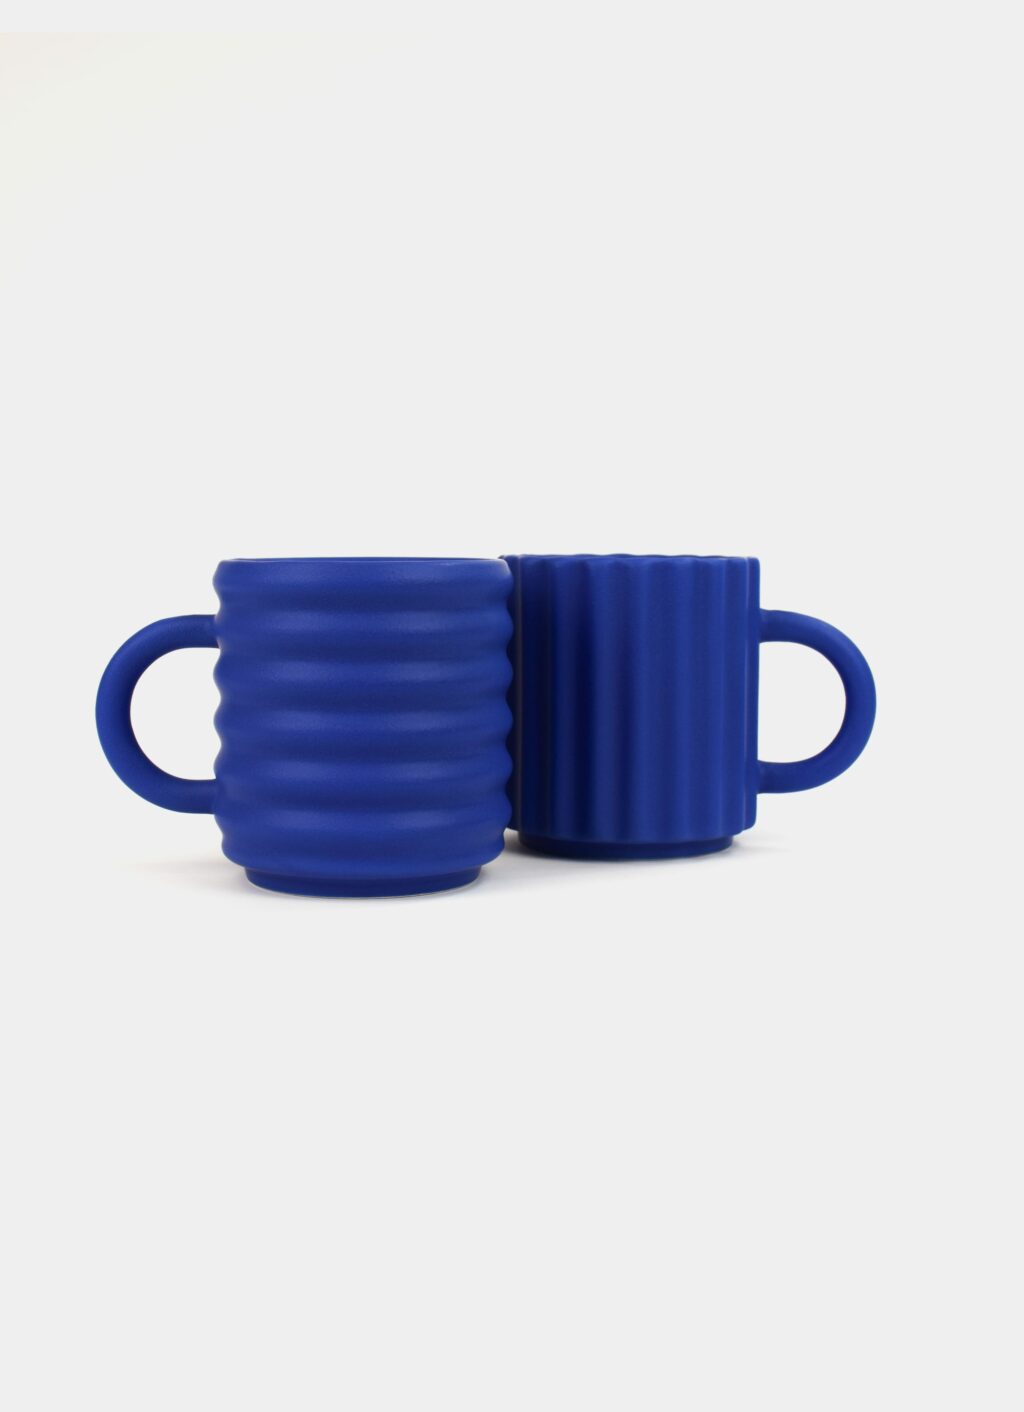 Form and Seek - Ripple Mugs - Set of Two - Cobalt